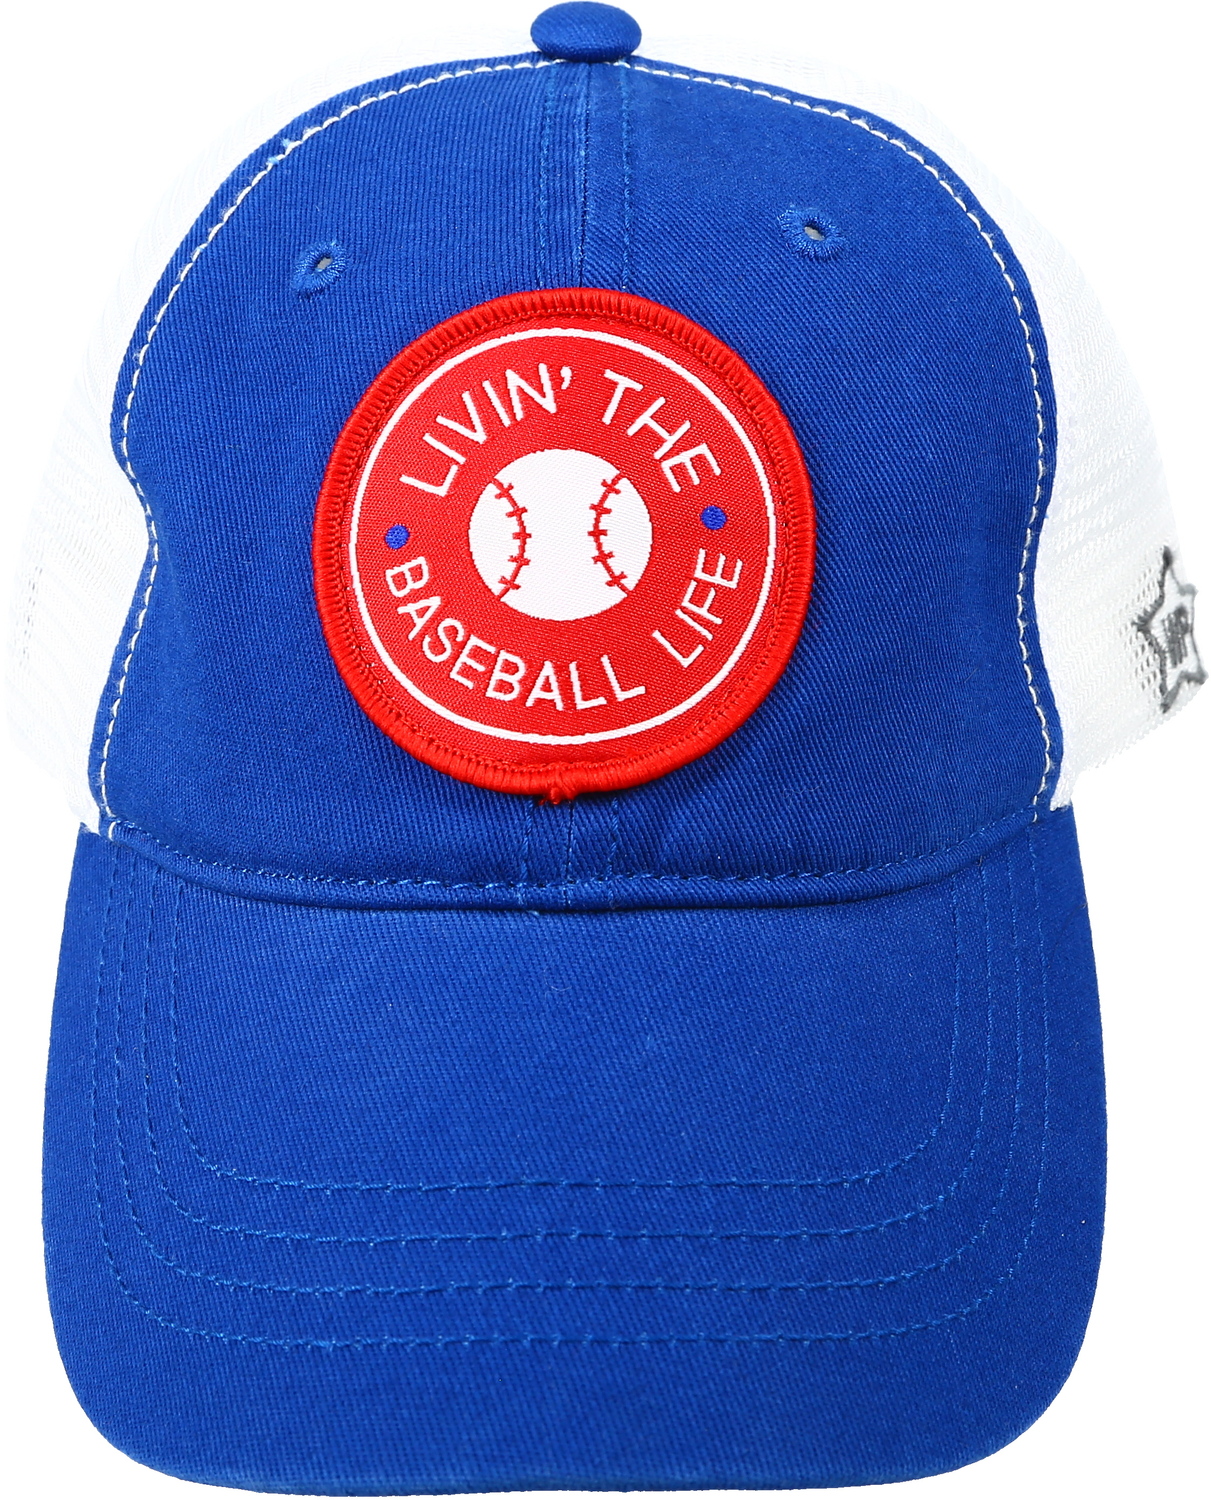 Baseball Life by We People - Baseball Life - Blue Adjustable Mesh Hat